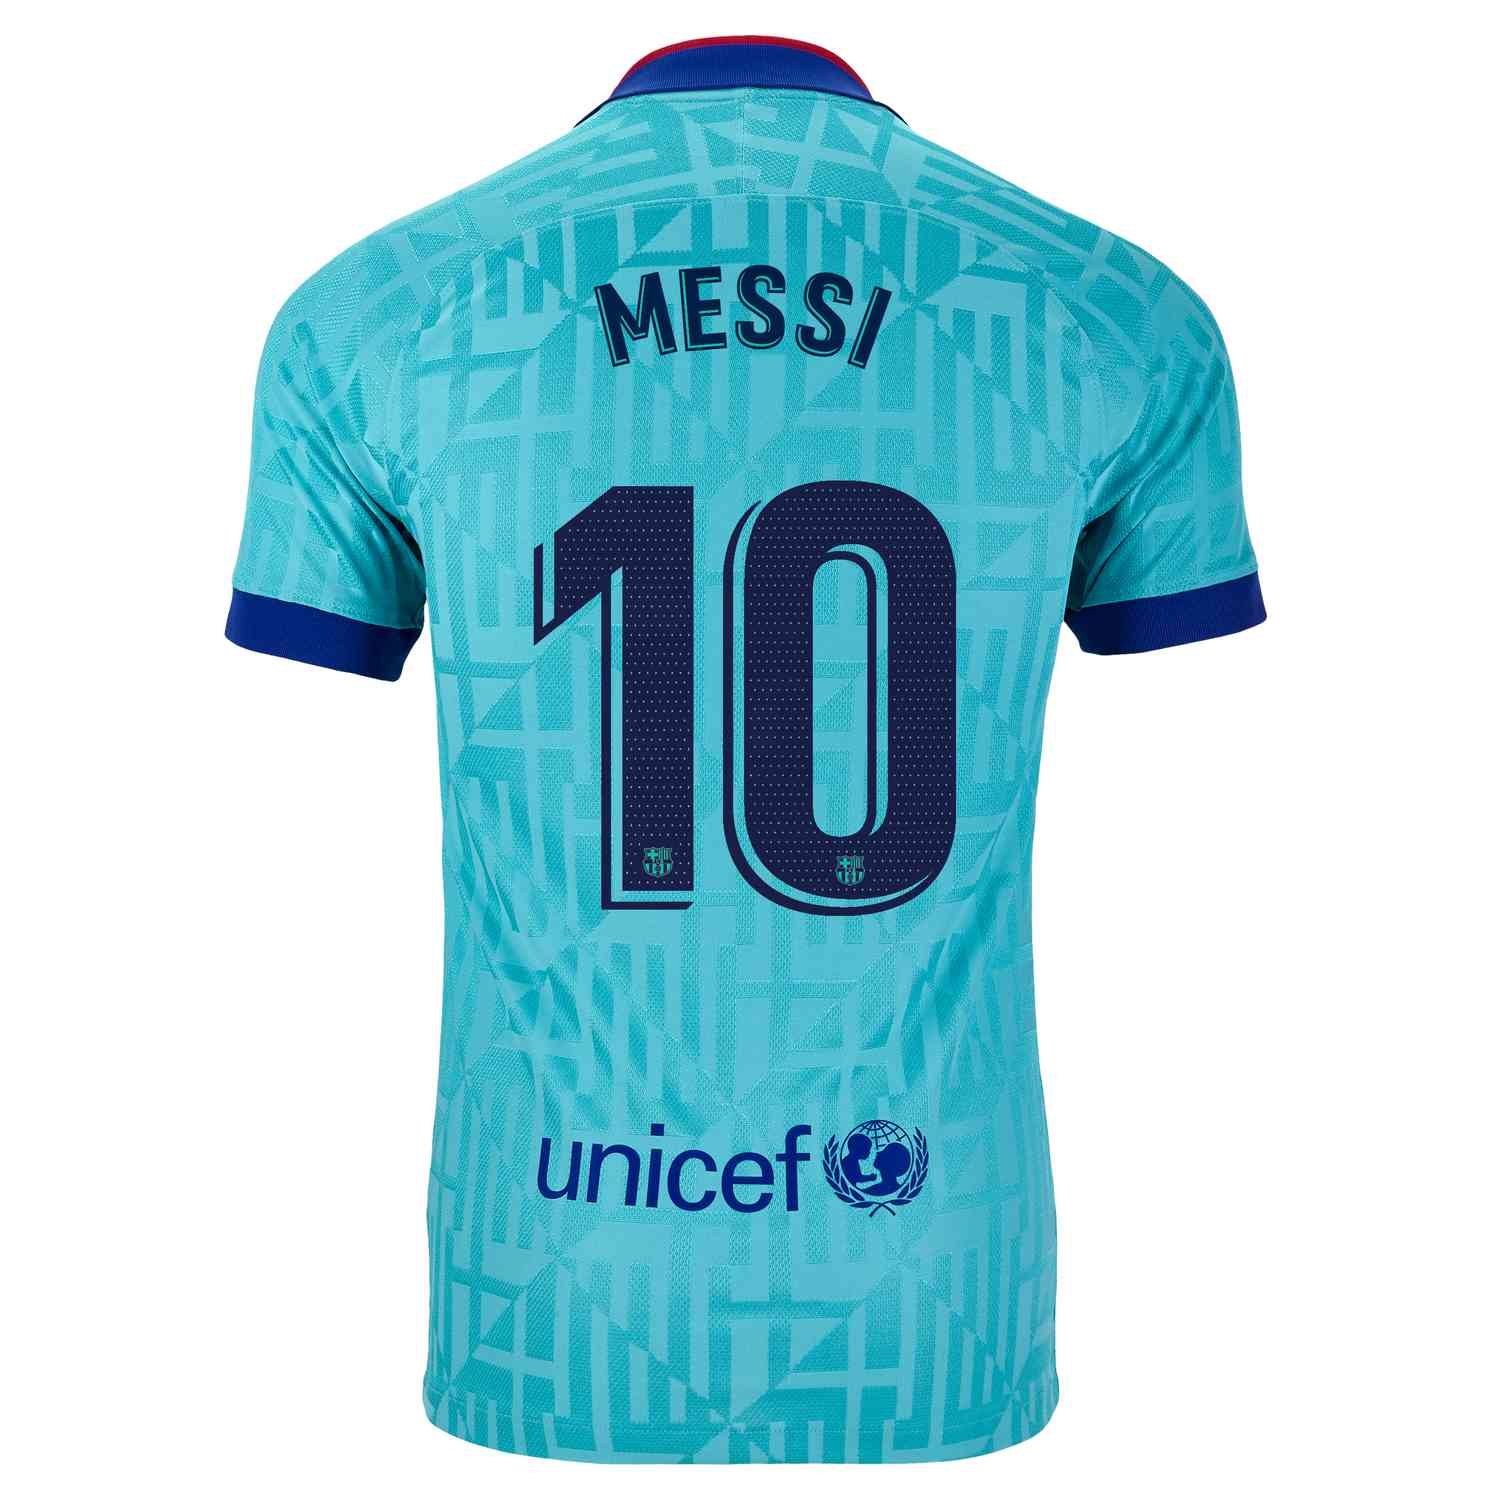 Lionel Messi Barca Jersey | lupon.gov.ph